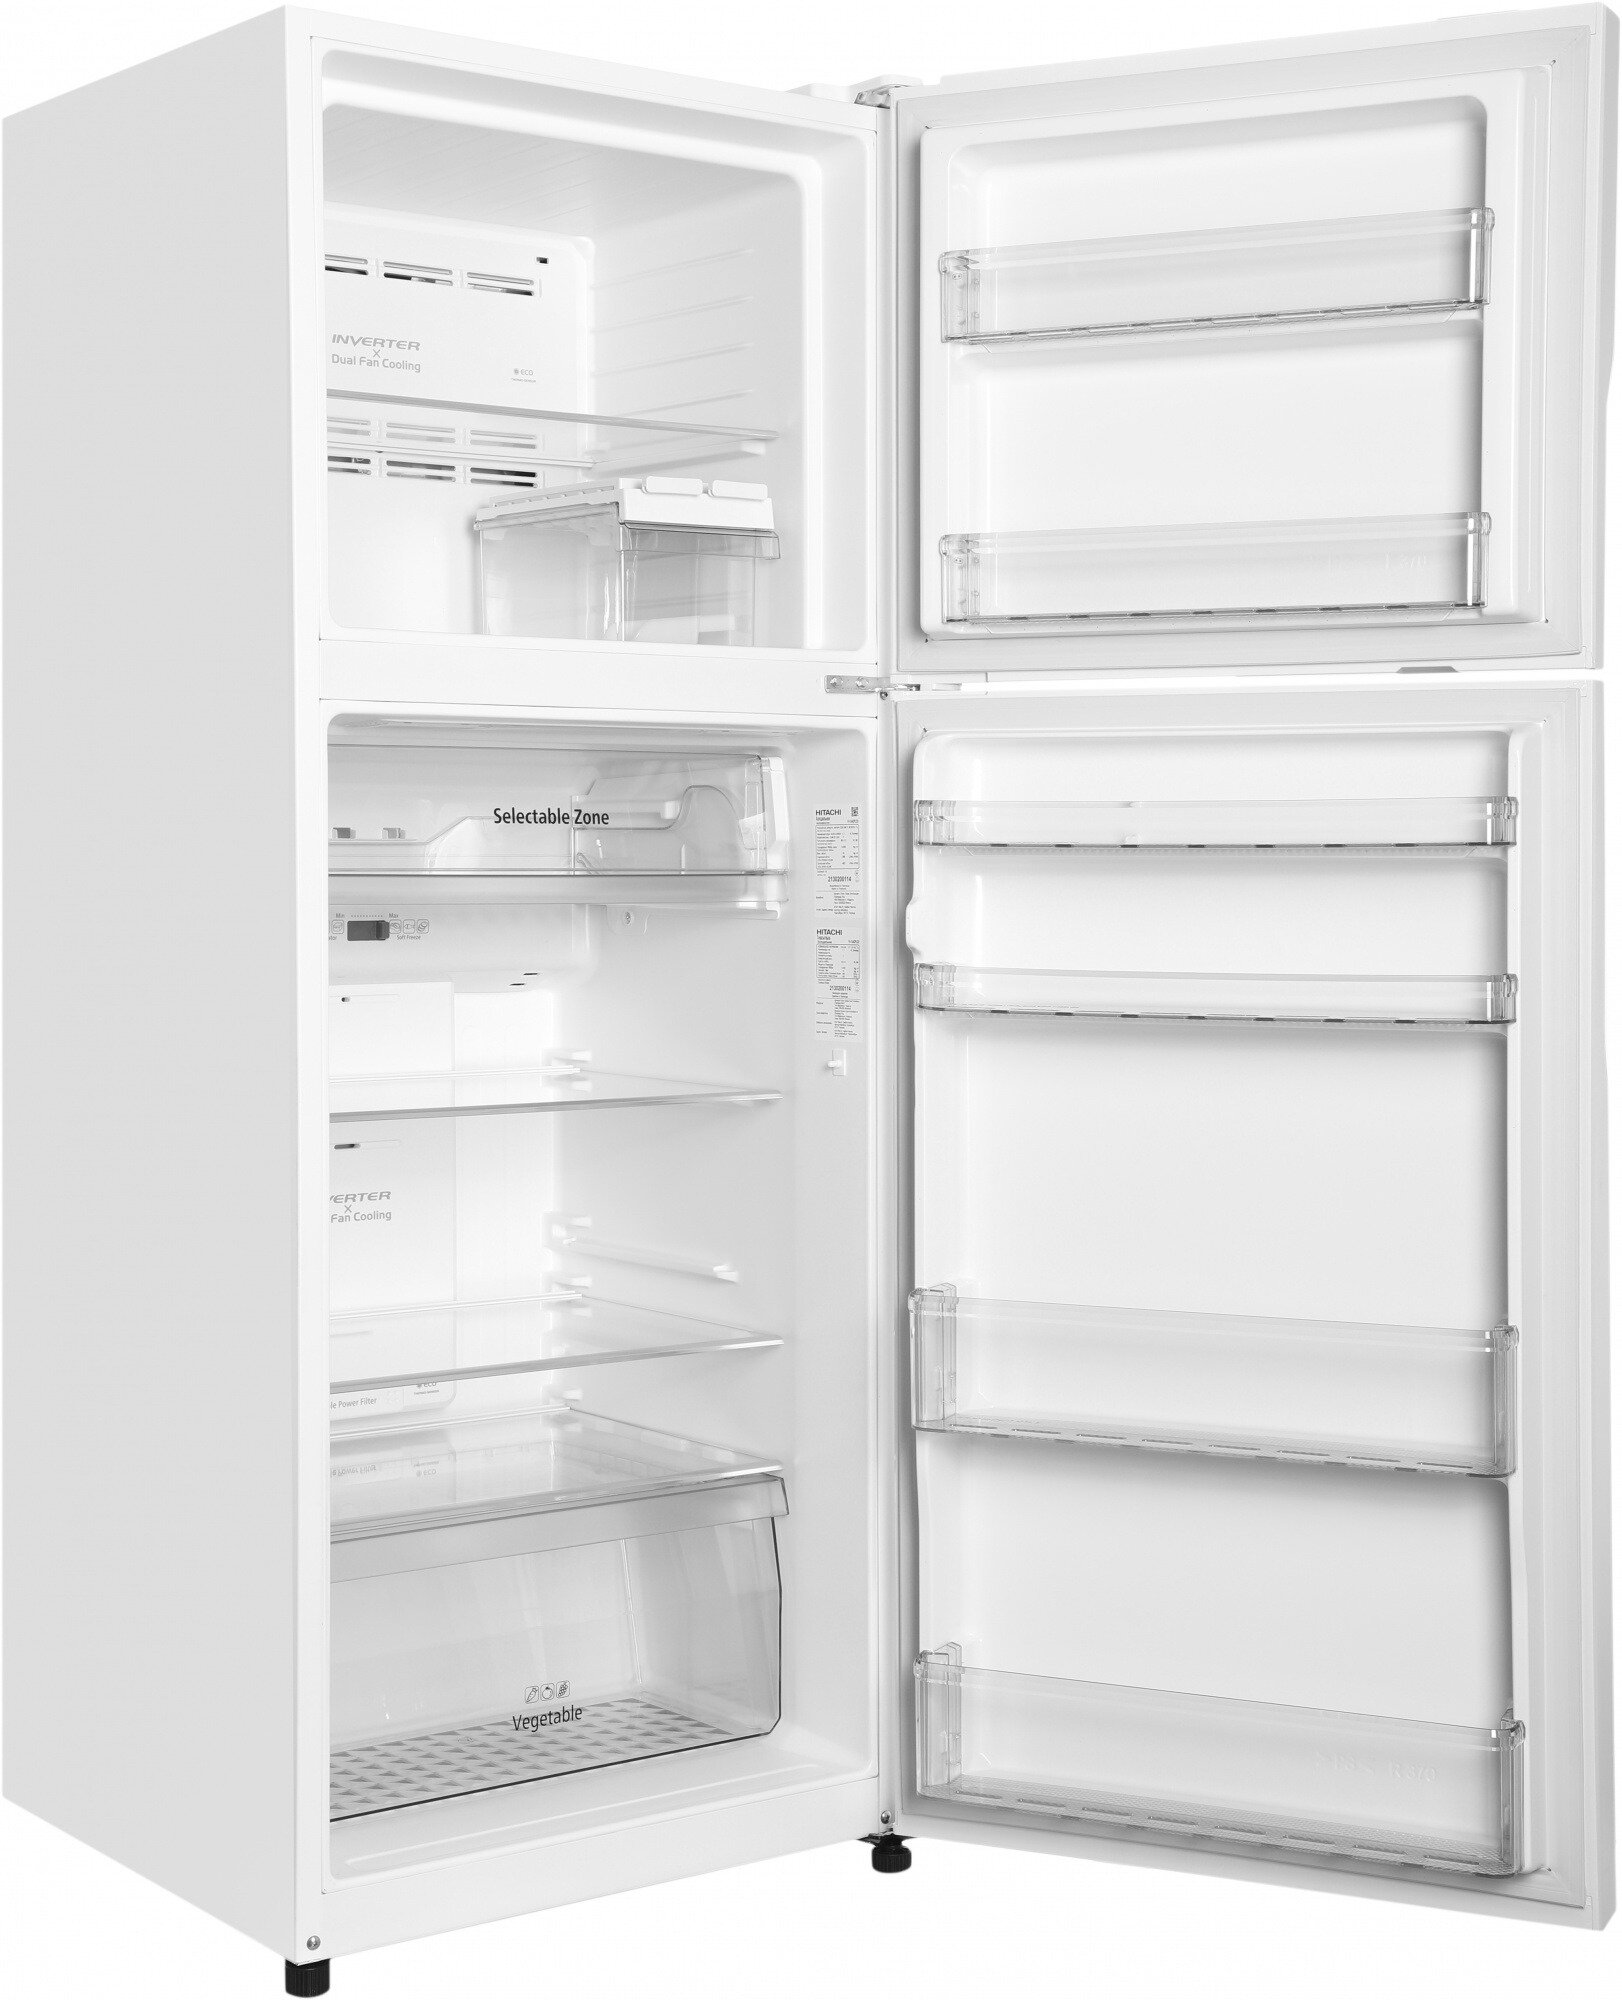 Холодильник Hitachi R-VX440PUC9 PWH 2-хкамерн. белый инвертер